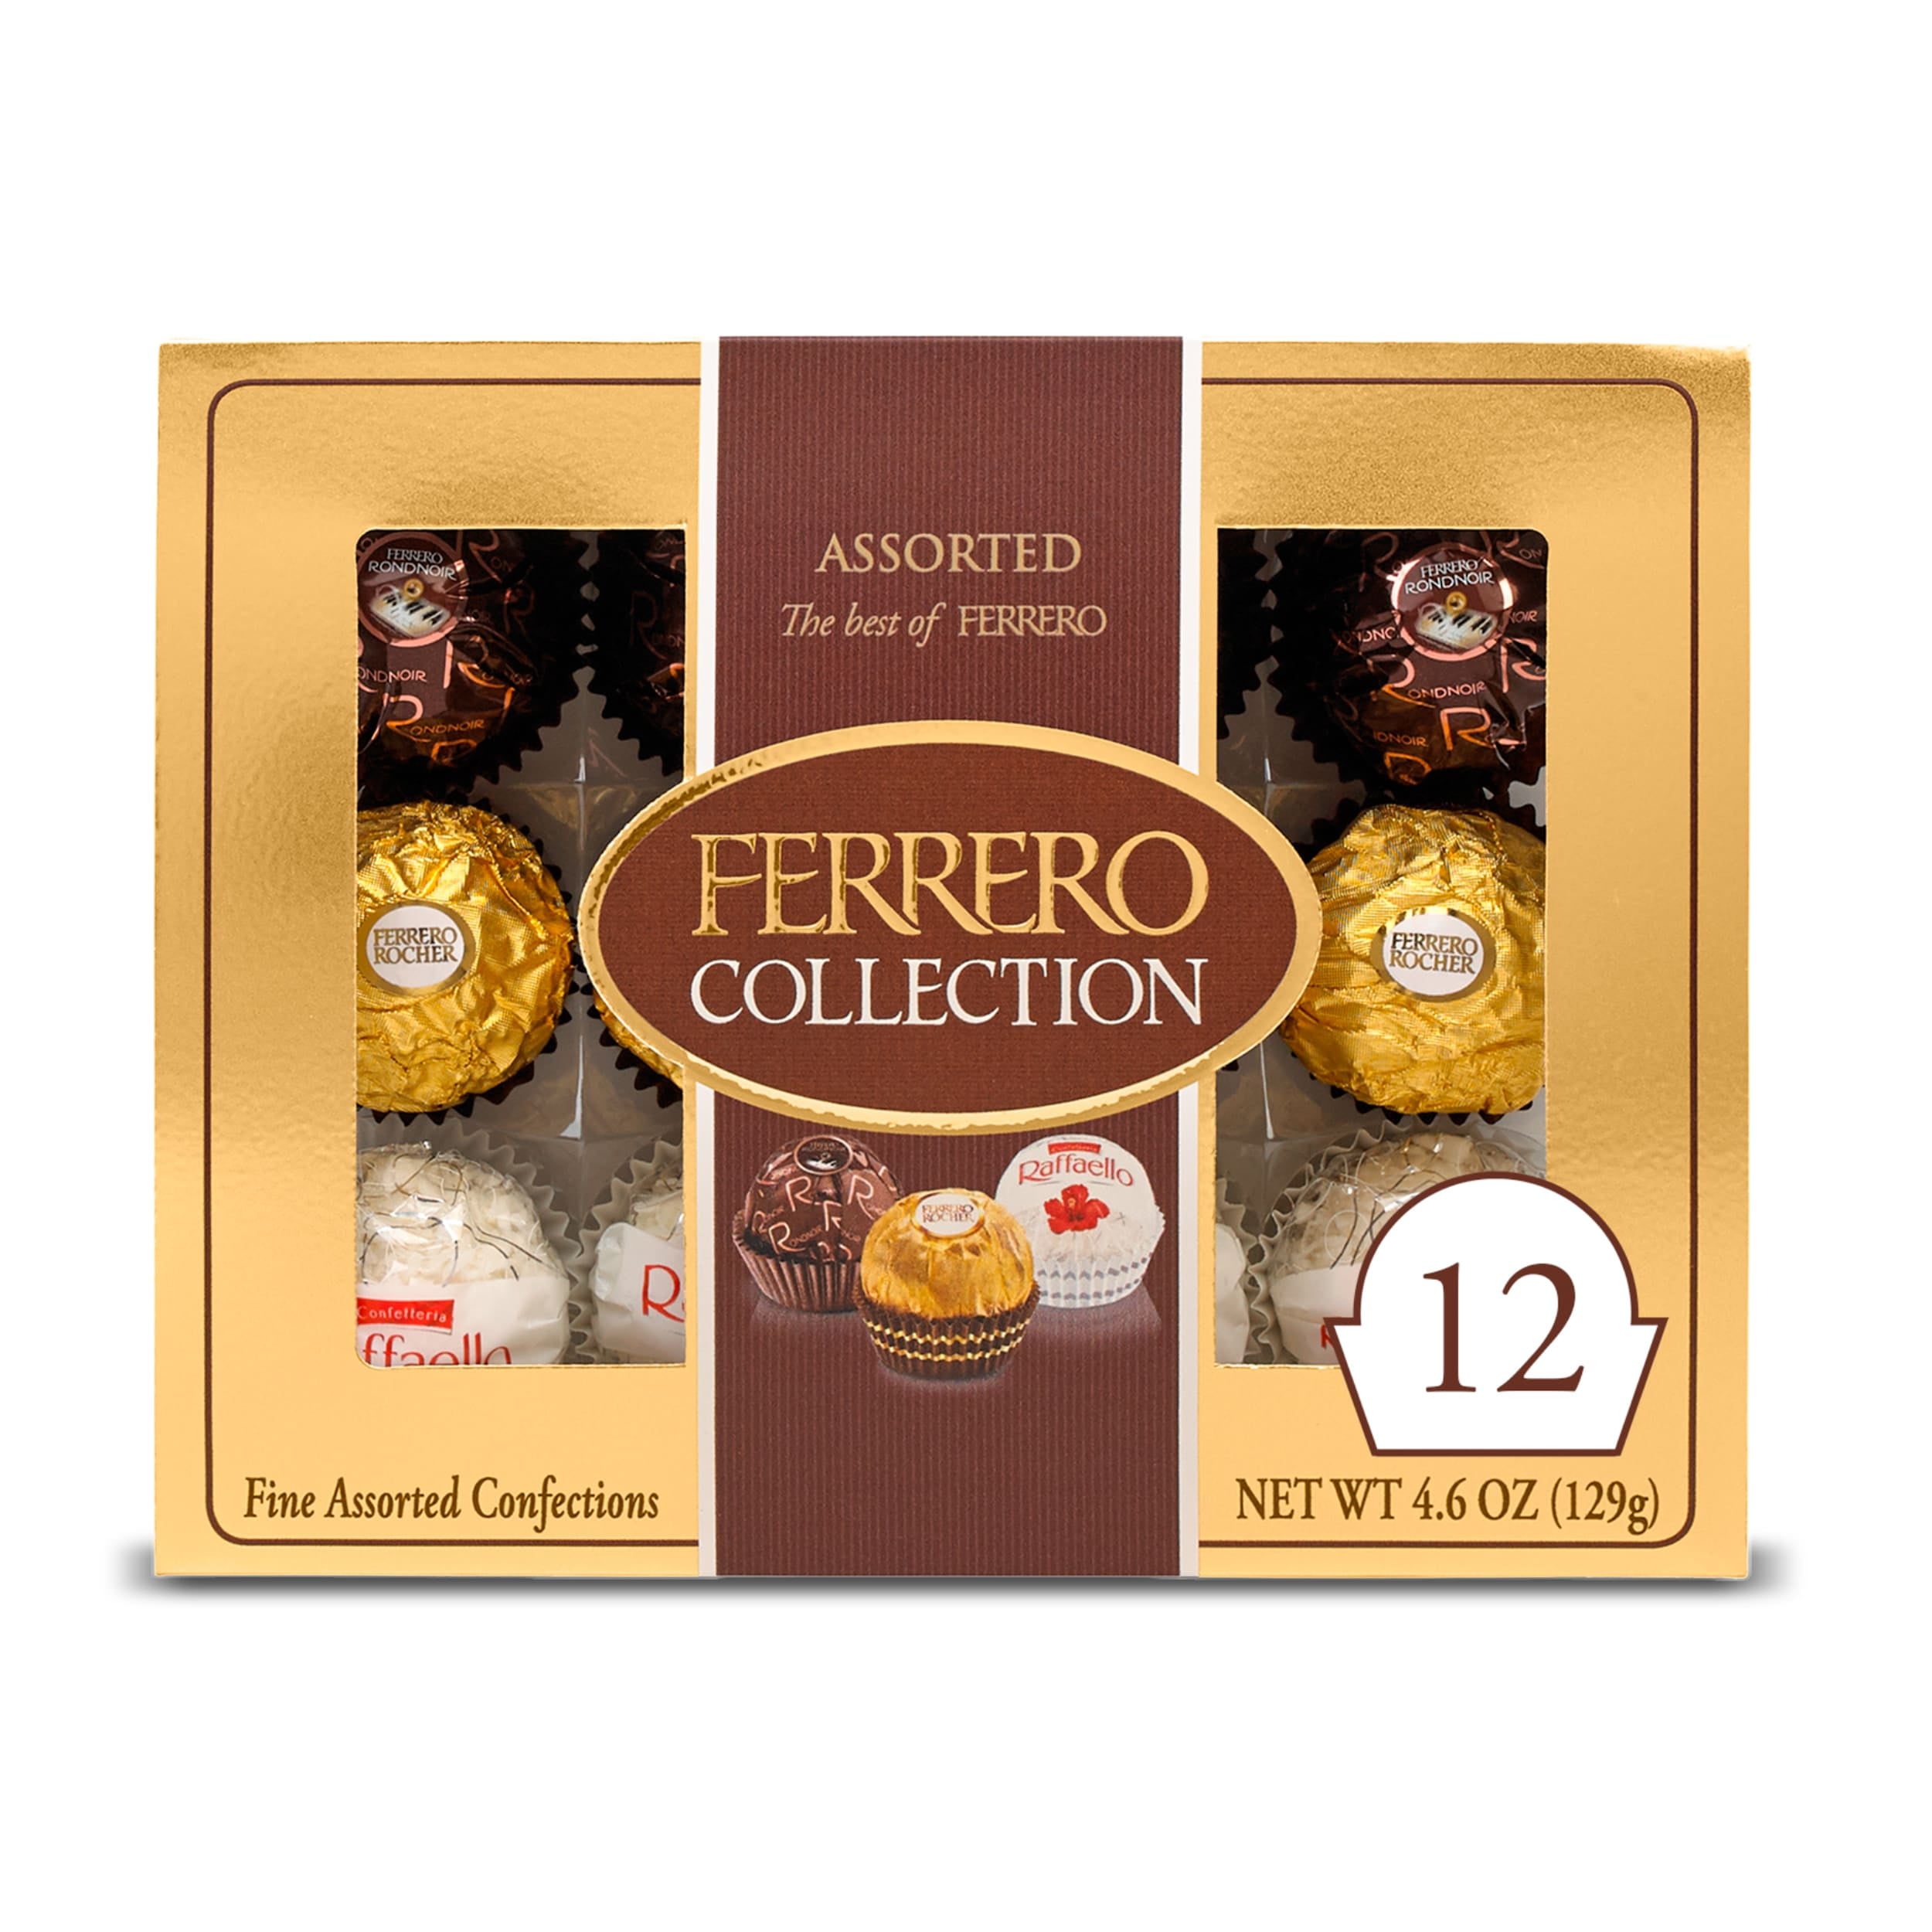 And Milk Hazelnut Ferrero Collection Assorted Premium And Chocolate Dark Coconut, 12 Count